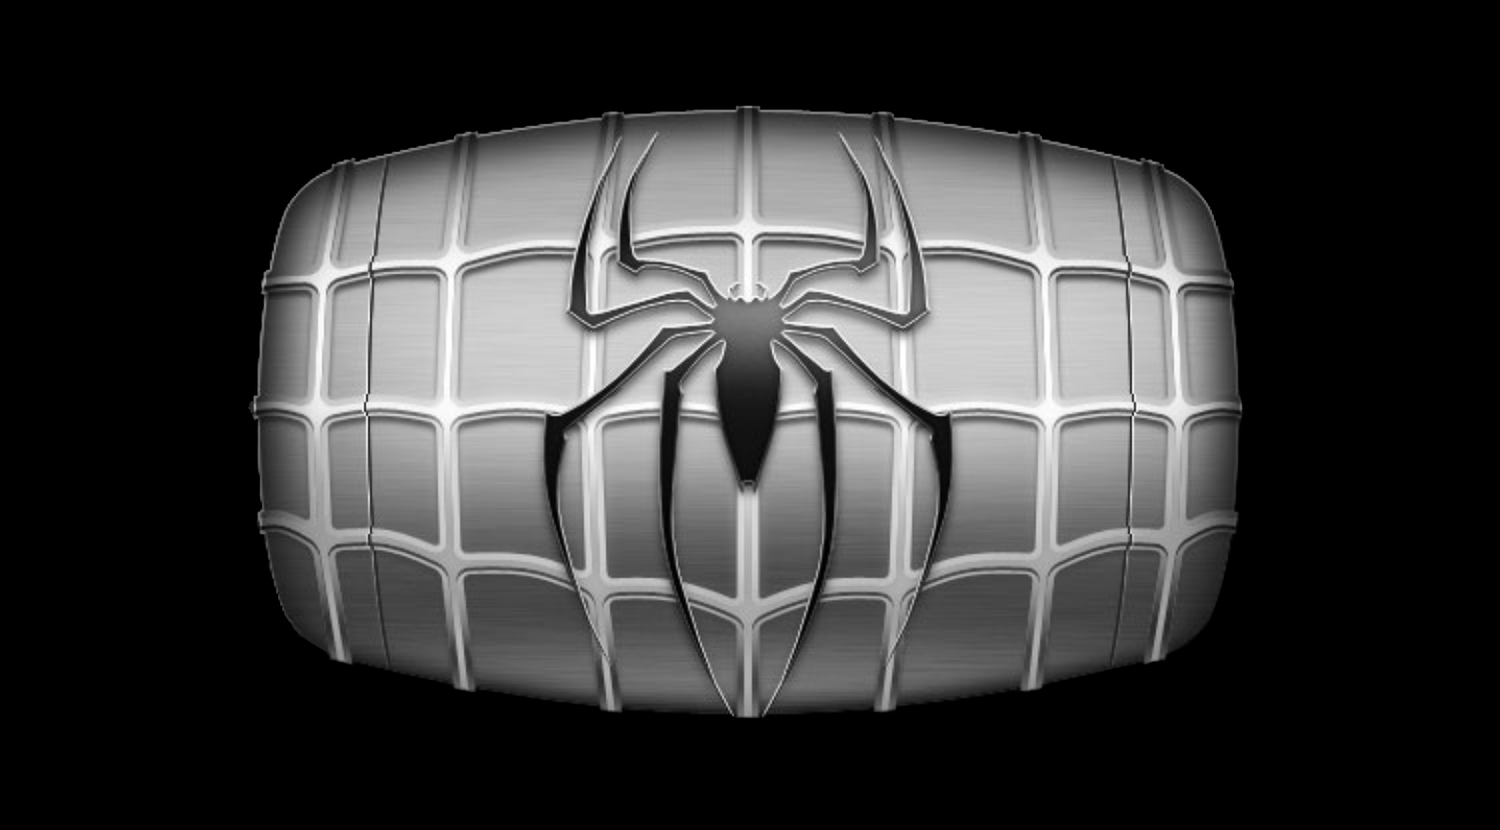 Black Spiderman 3D Wallpapers